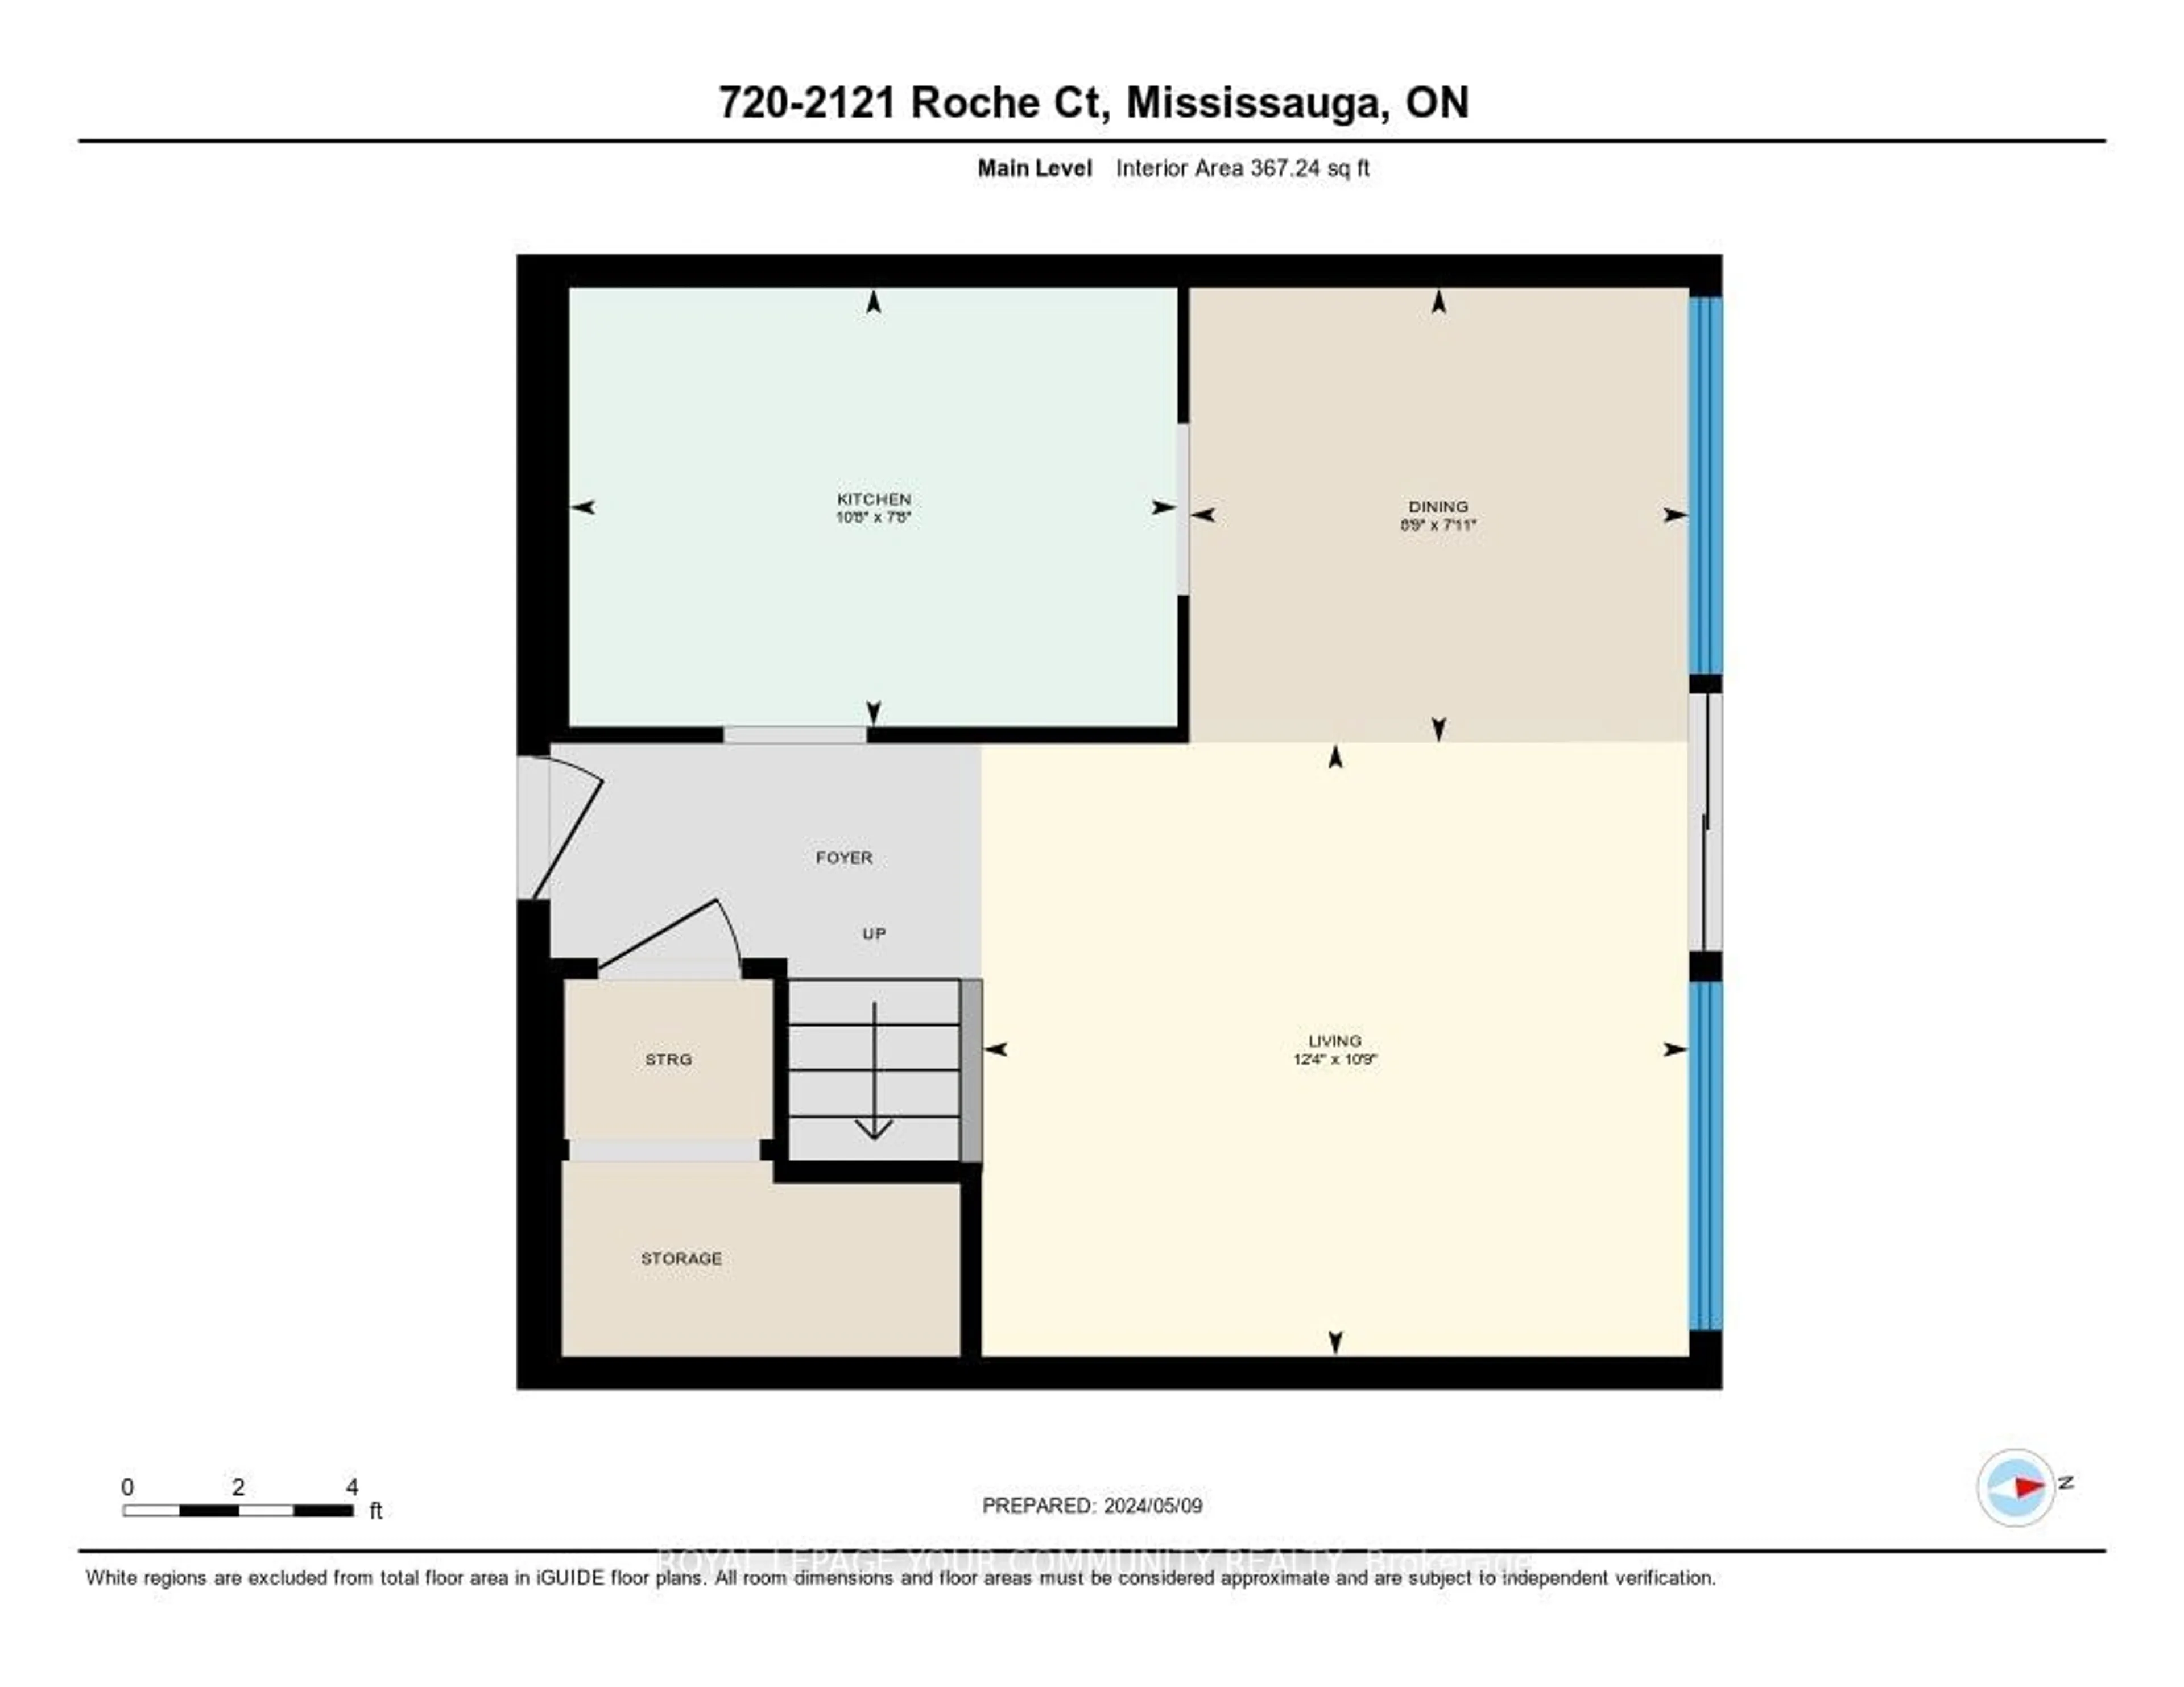 Floor plan for 2121 Roche Crt #720, Mississauga Ontario L5K 2C7